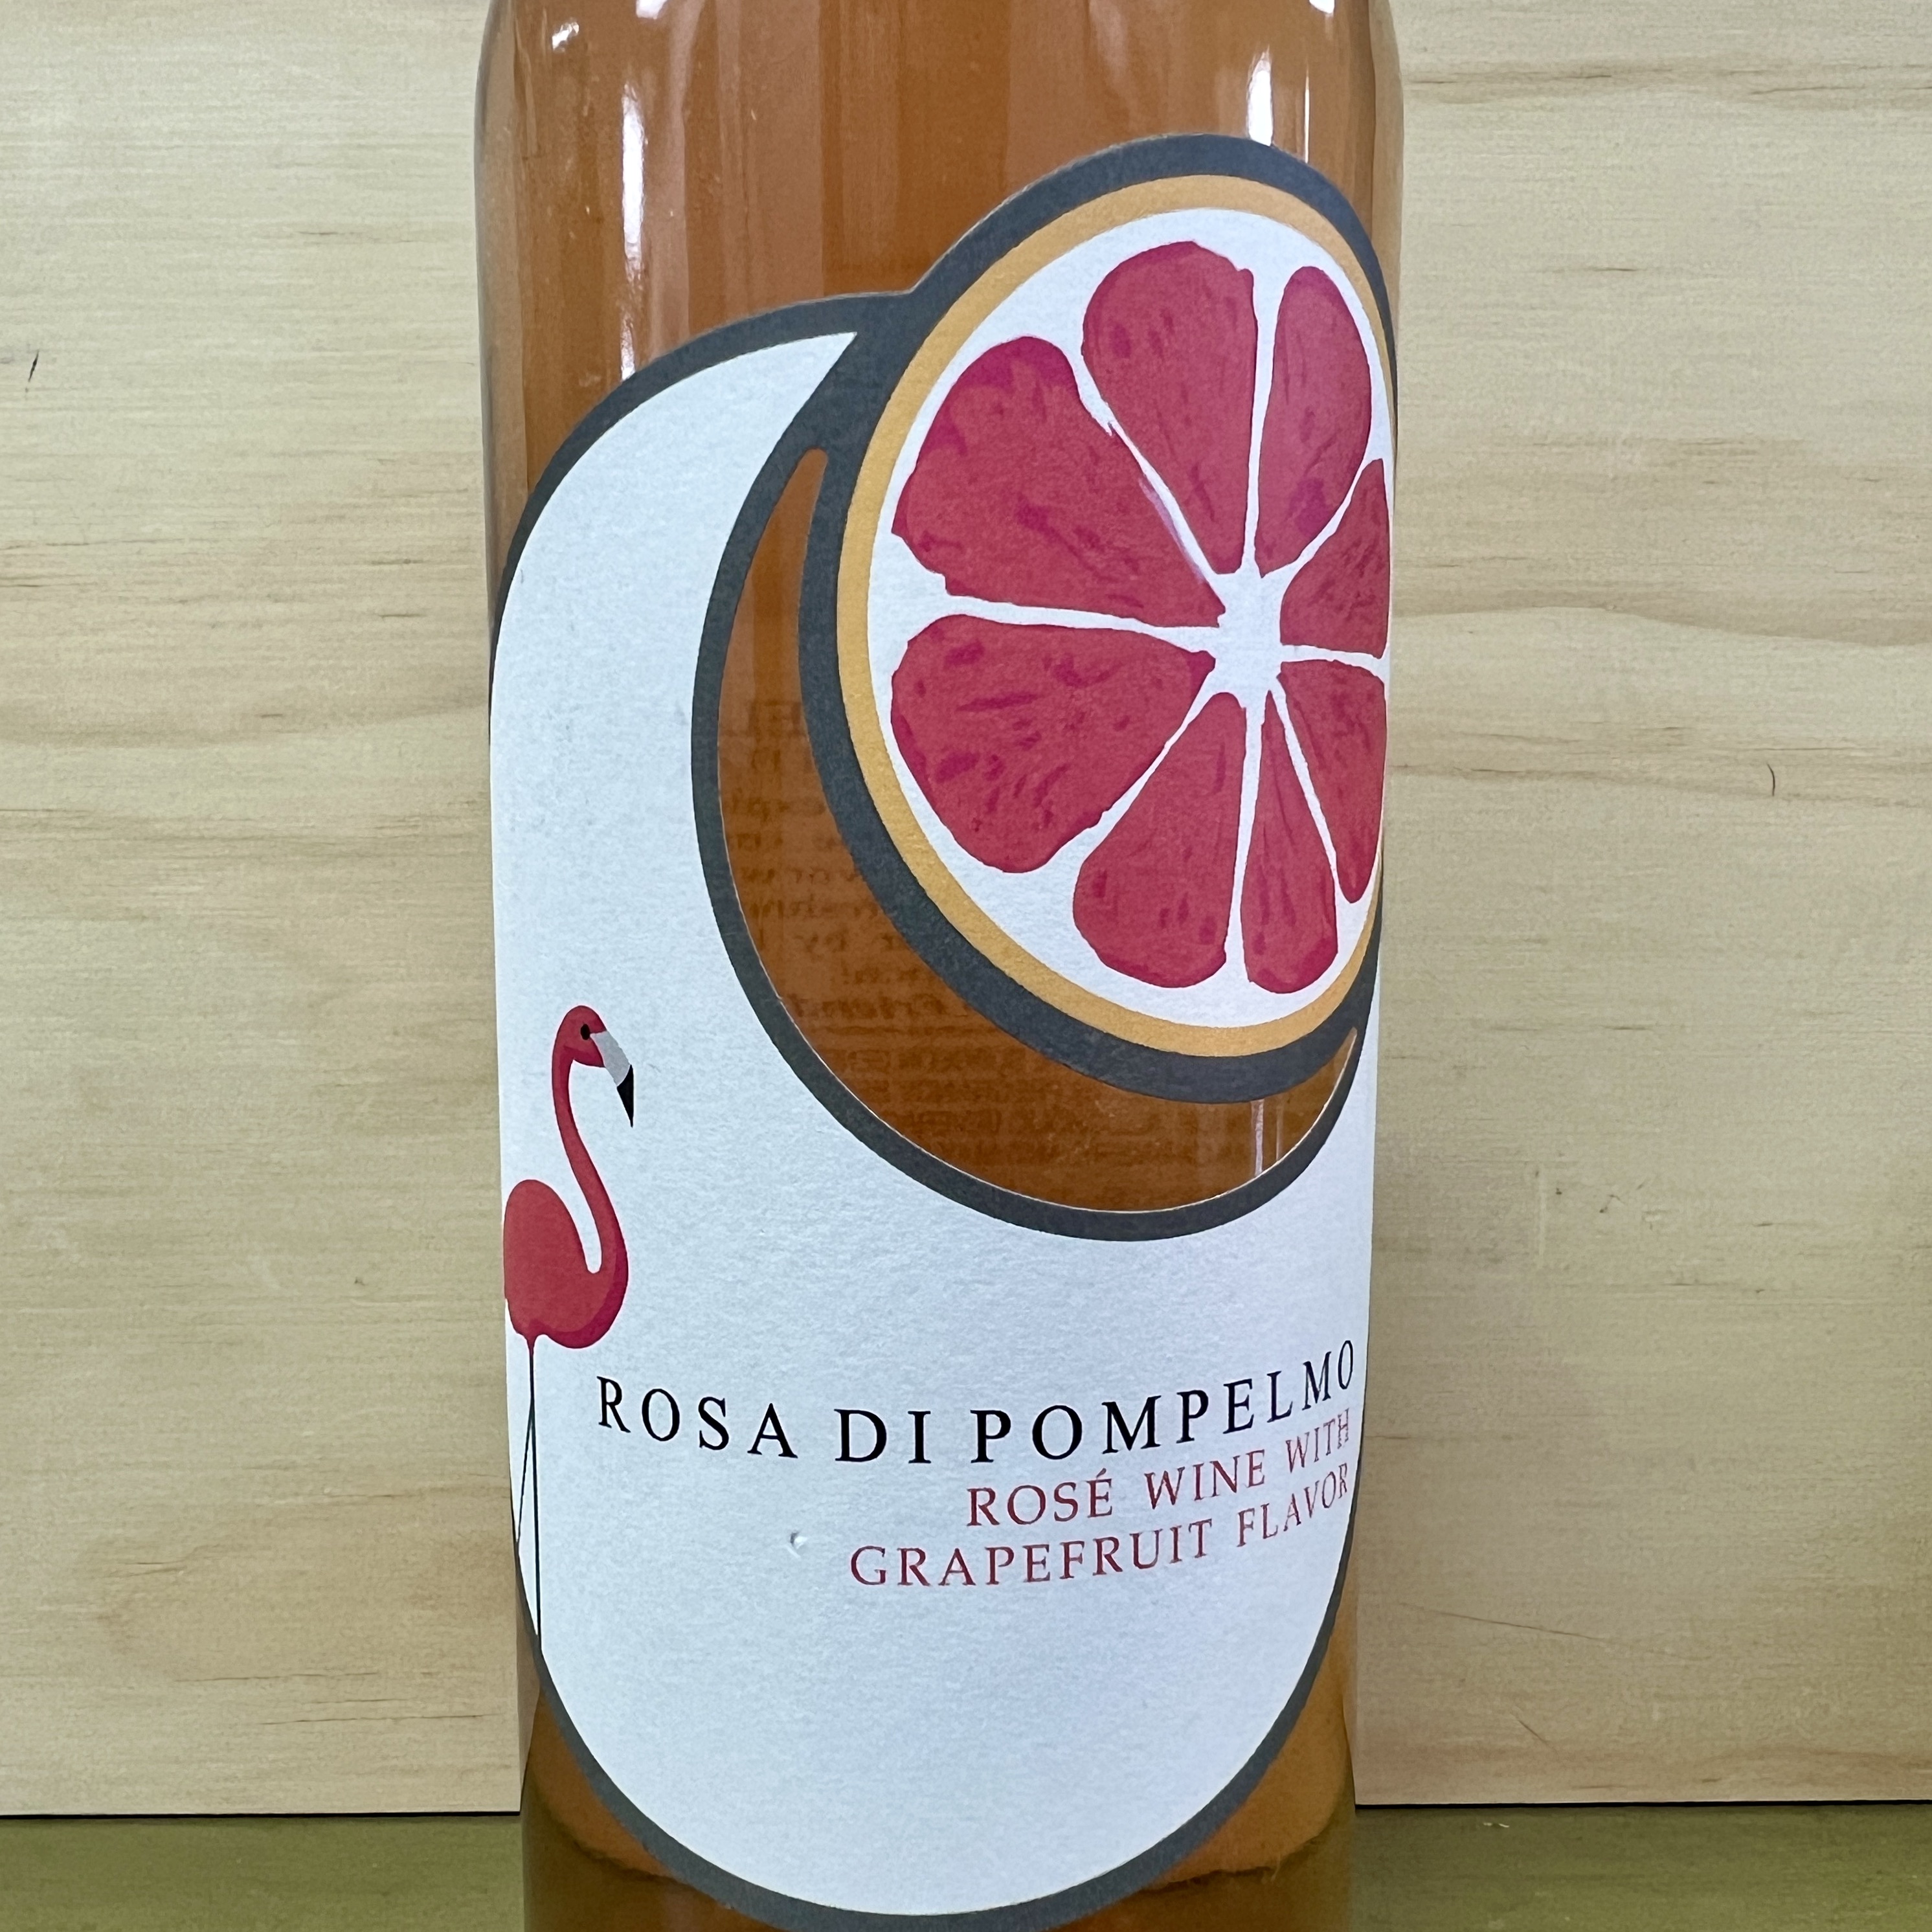 Rosa di Pompelmo Rose with grapefruit flavoring